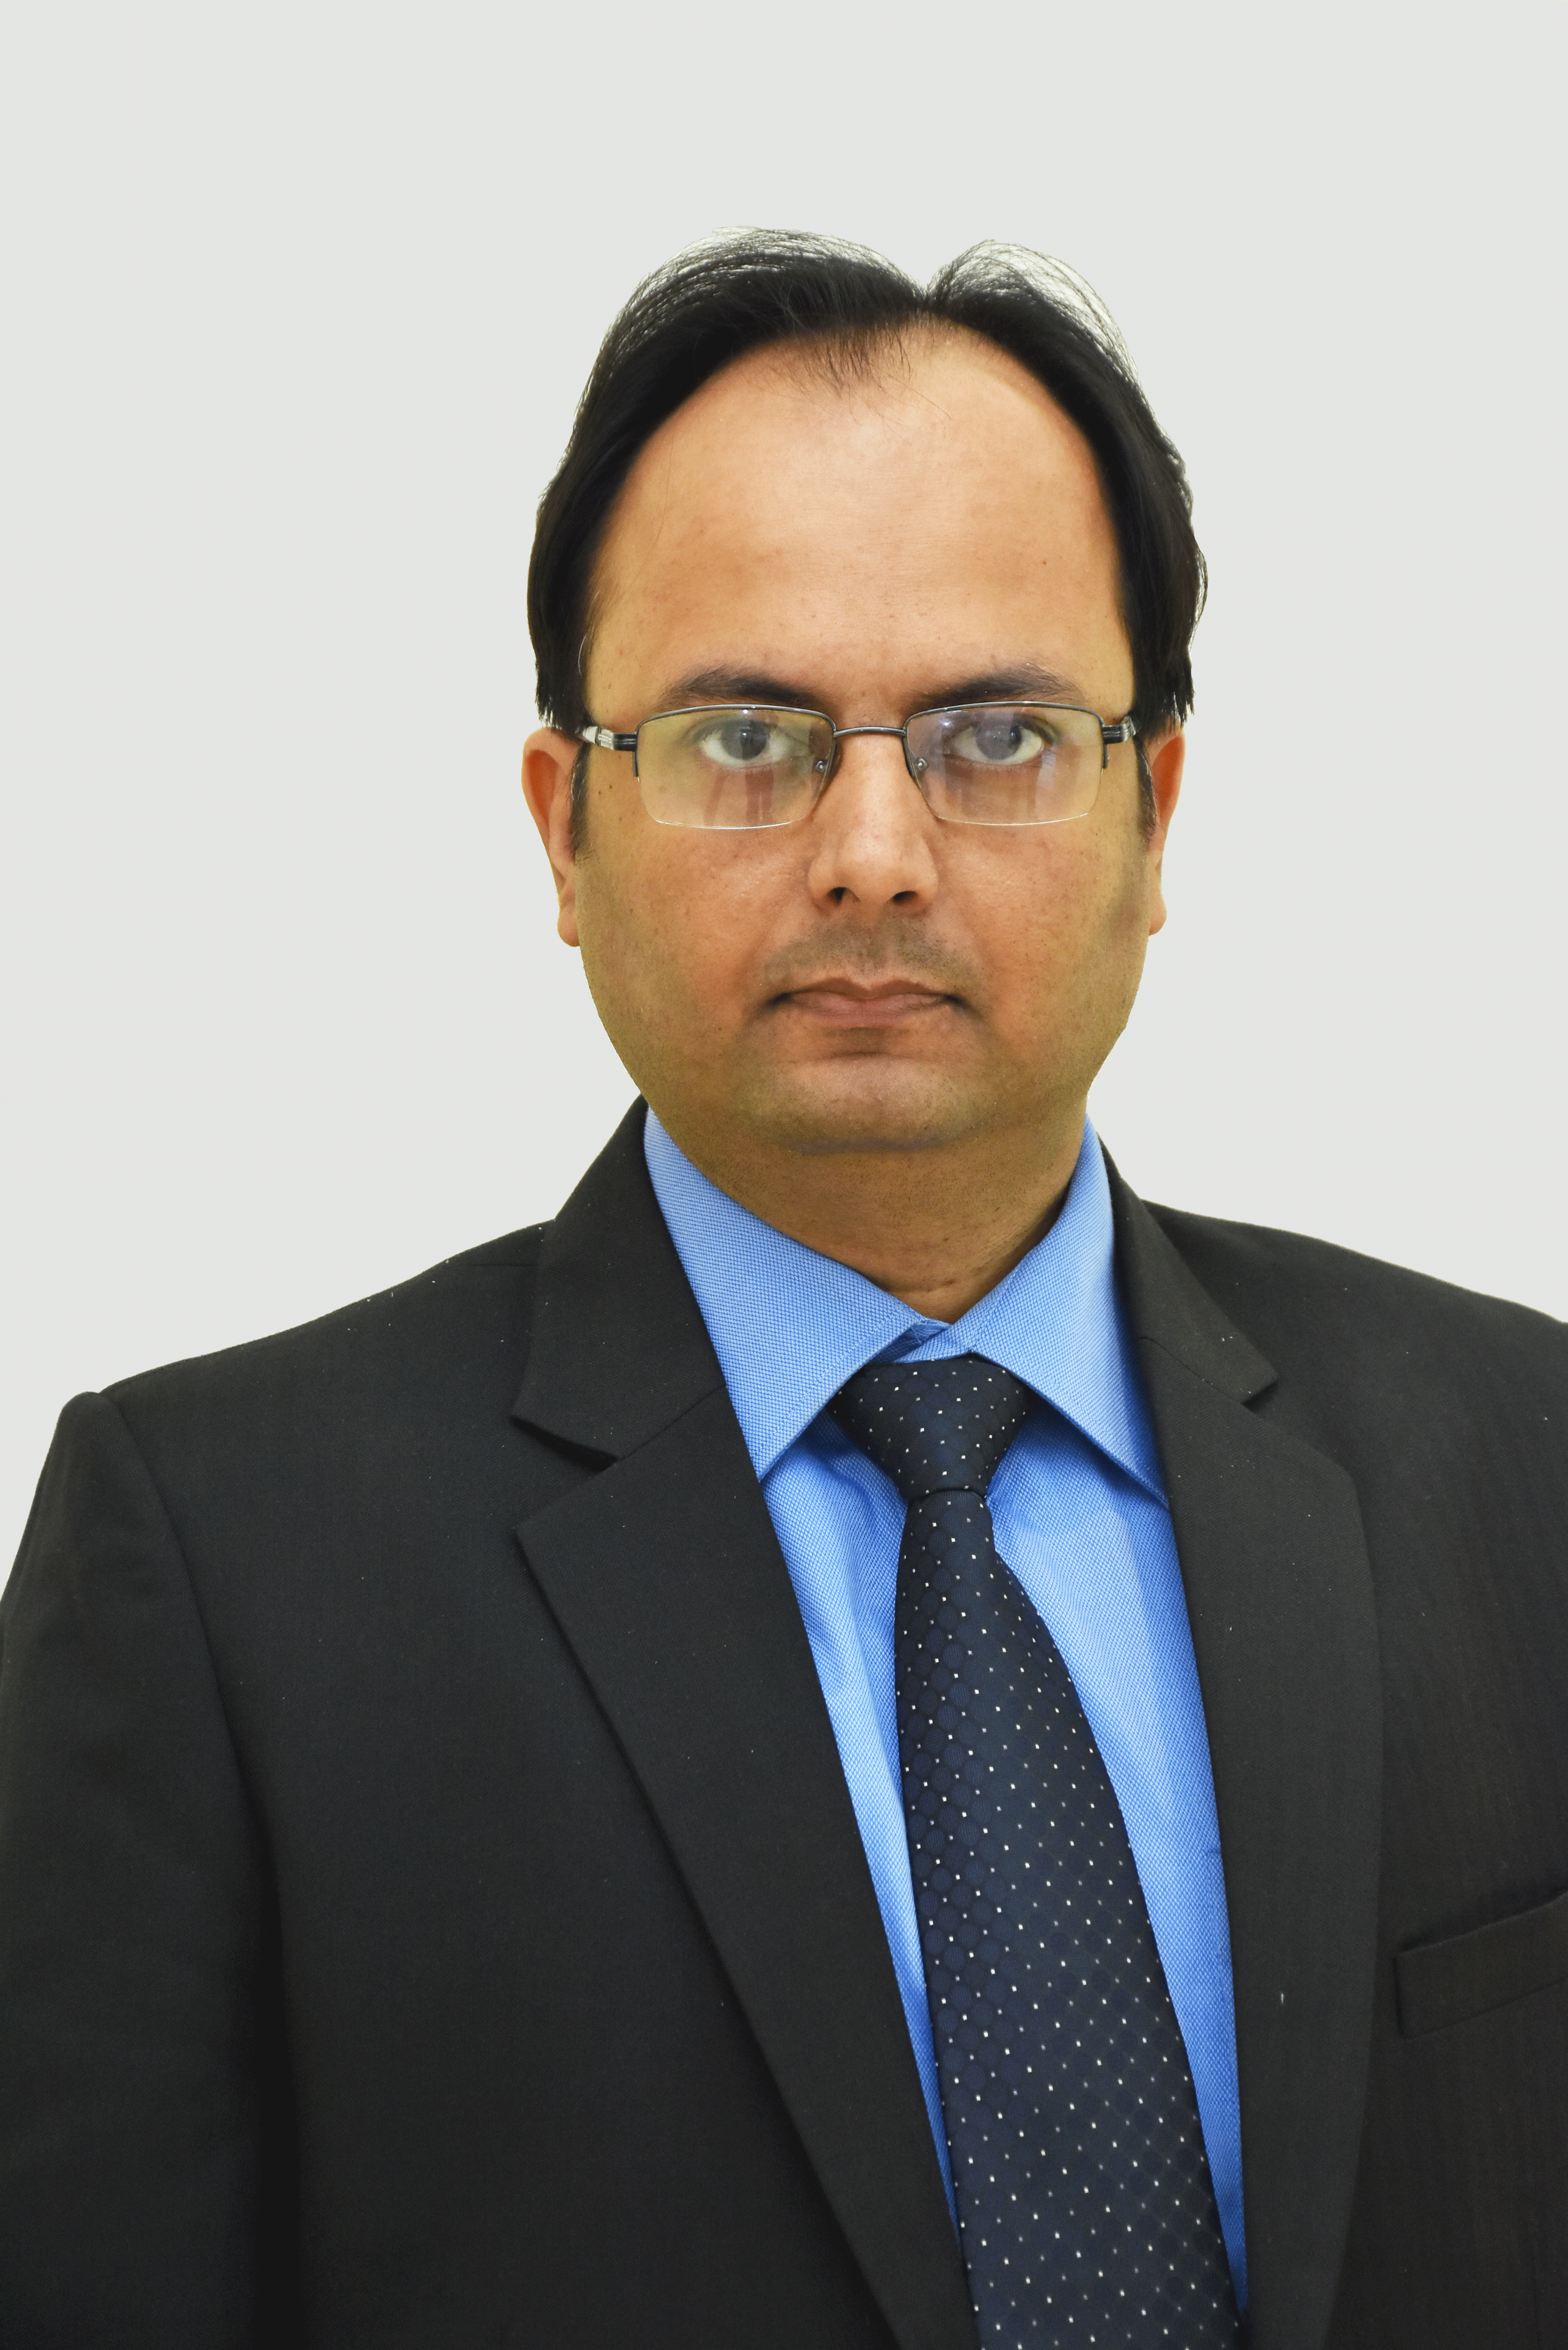 Rishi Jhunjhunwala